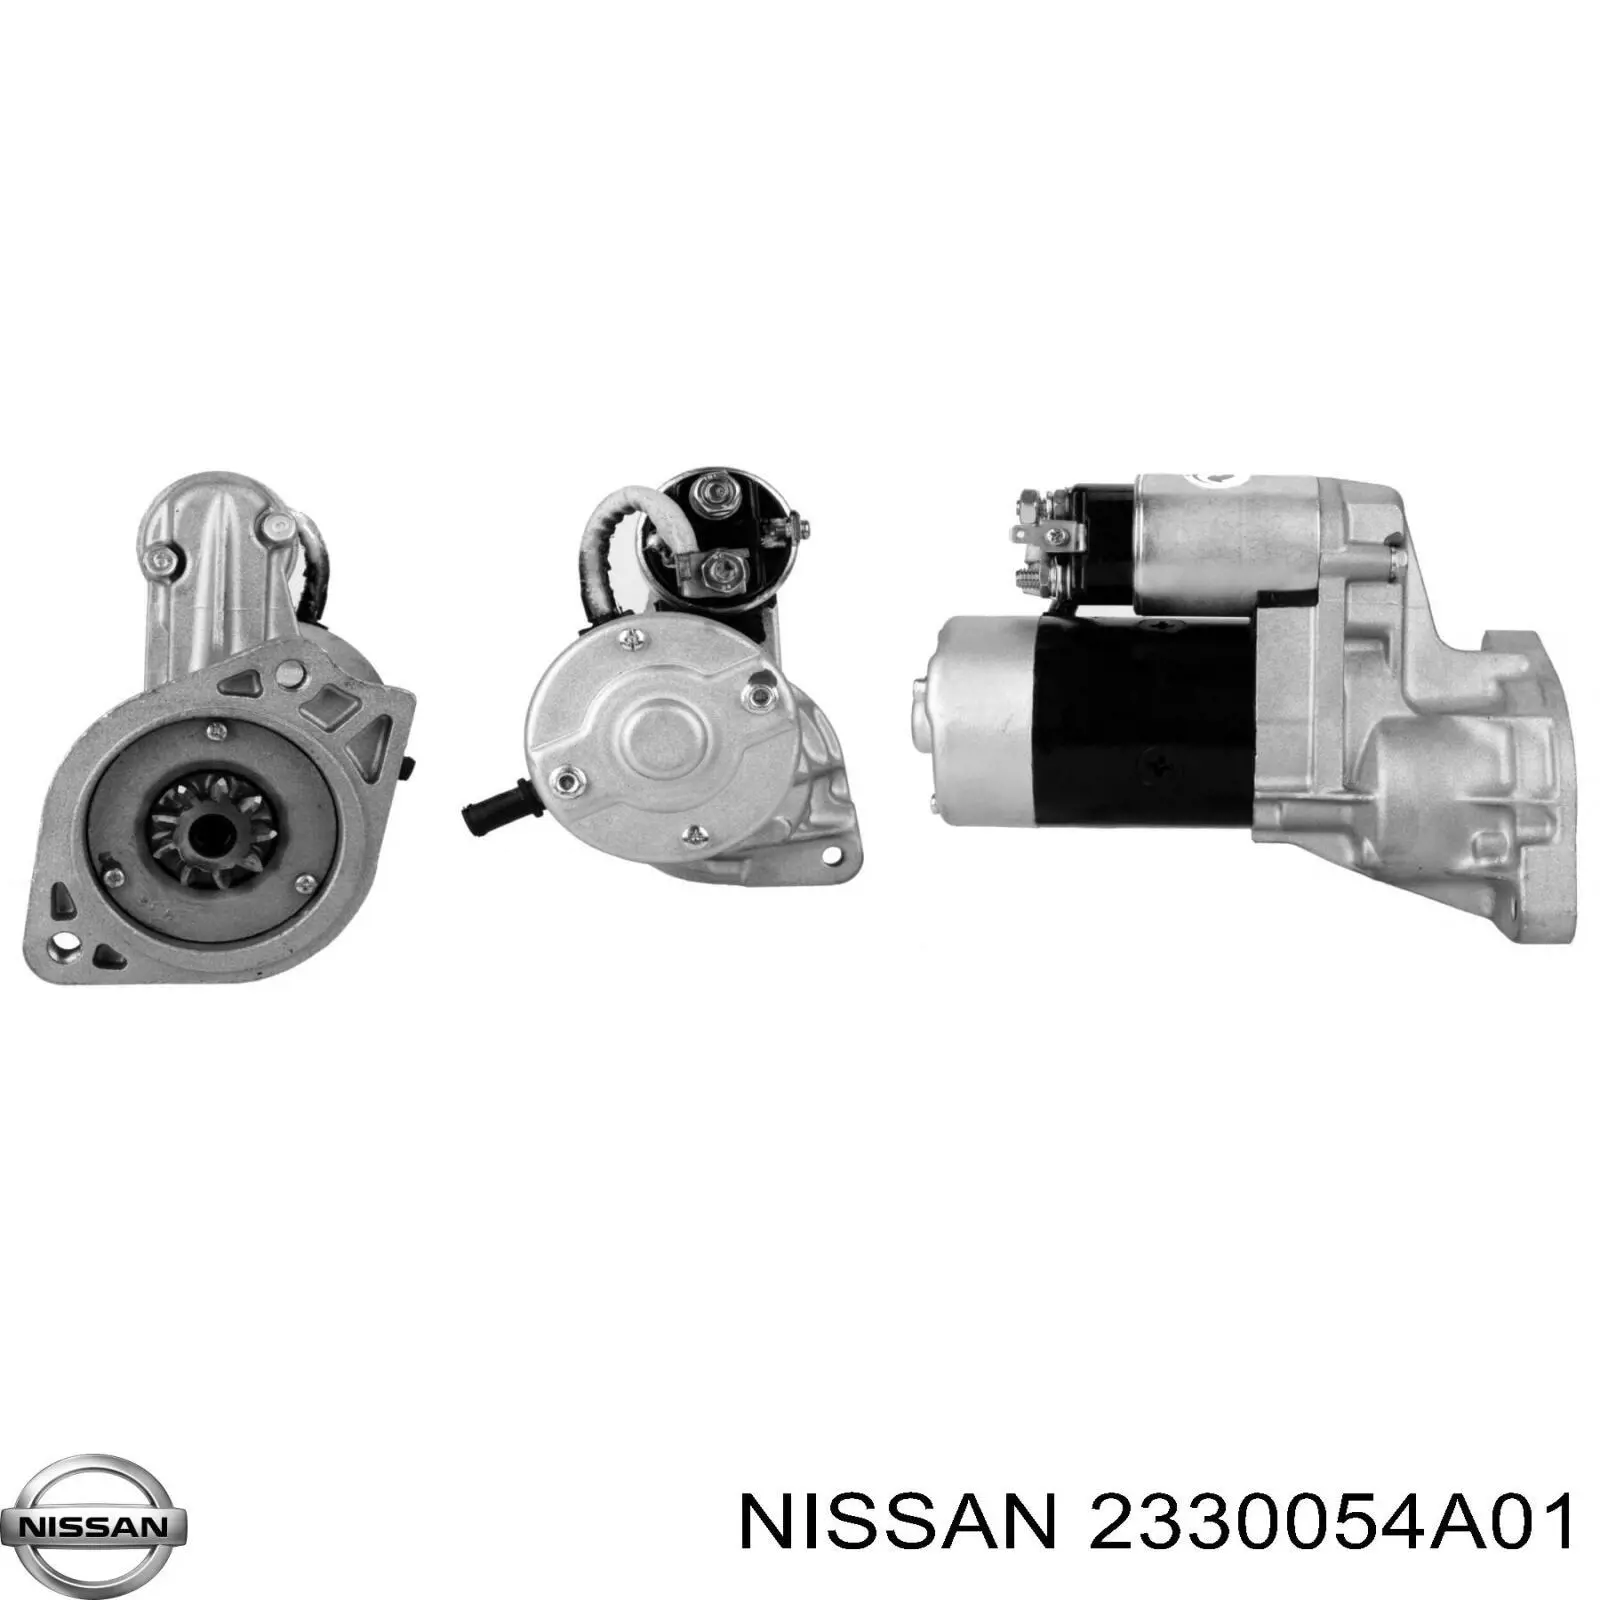 2330054A01 Nissan motor de arranque